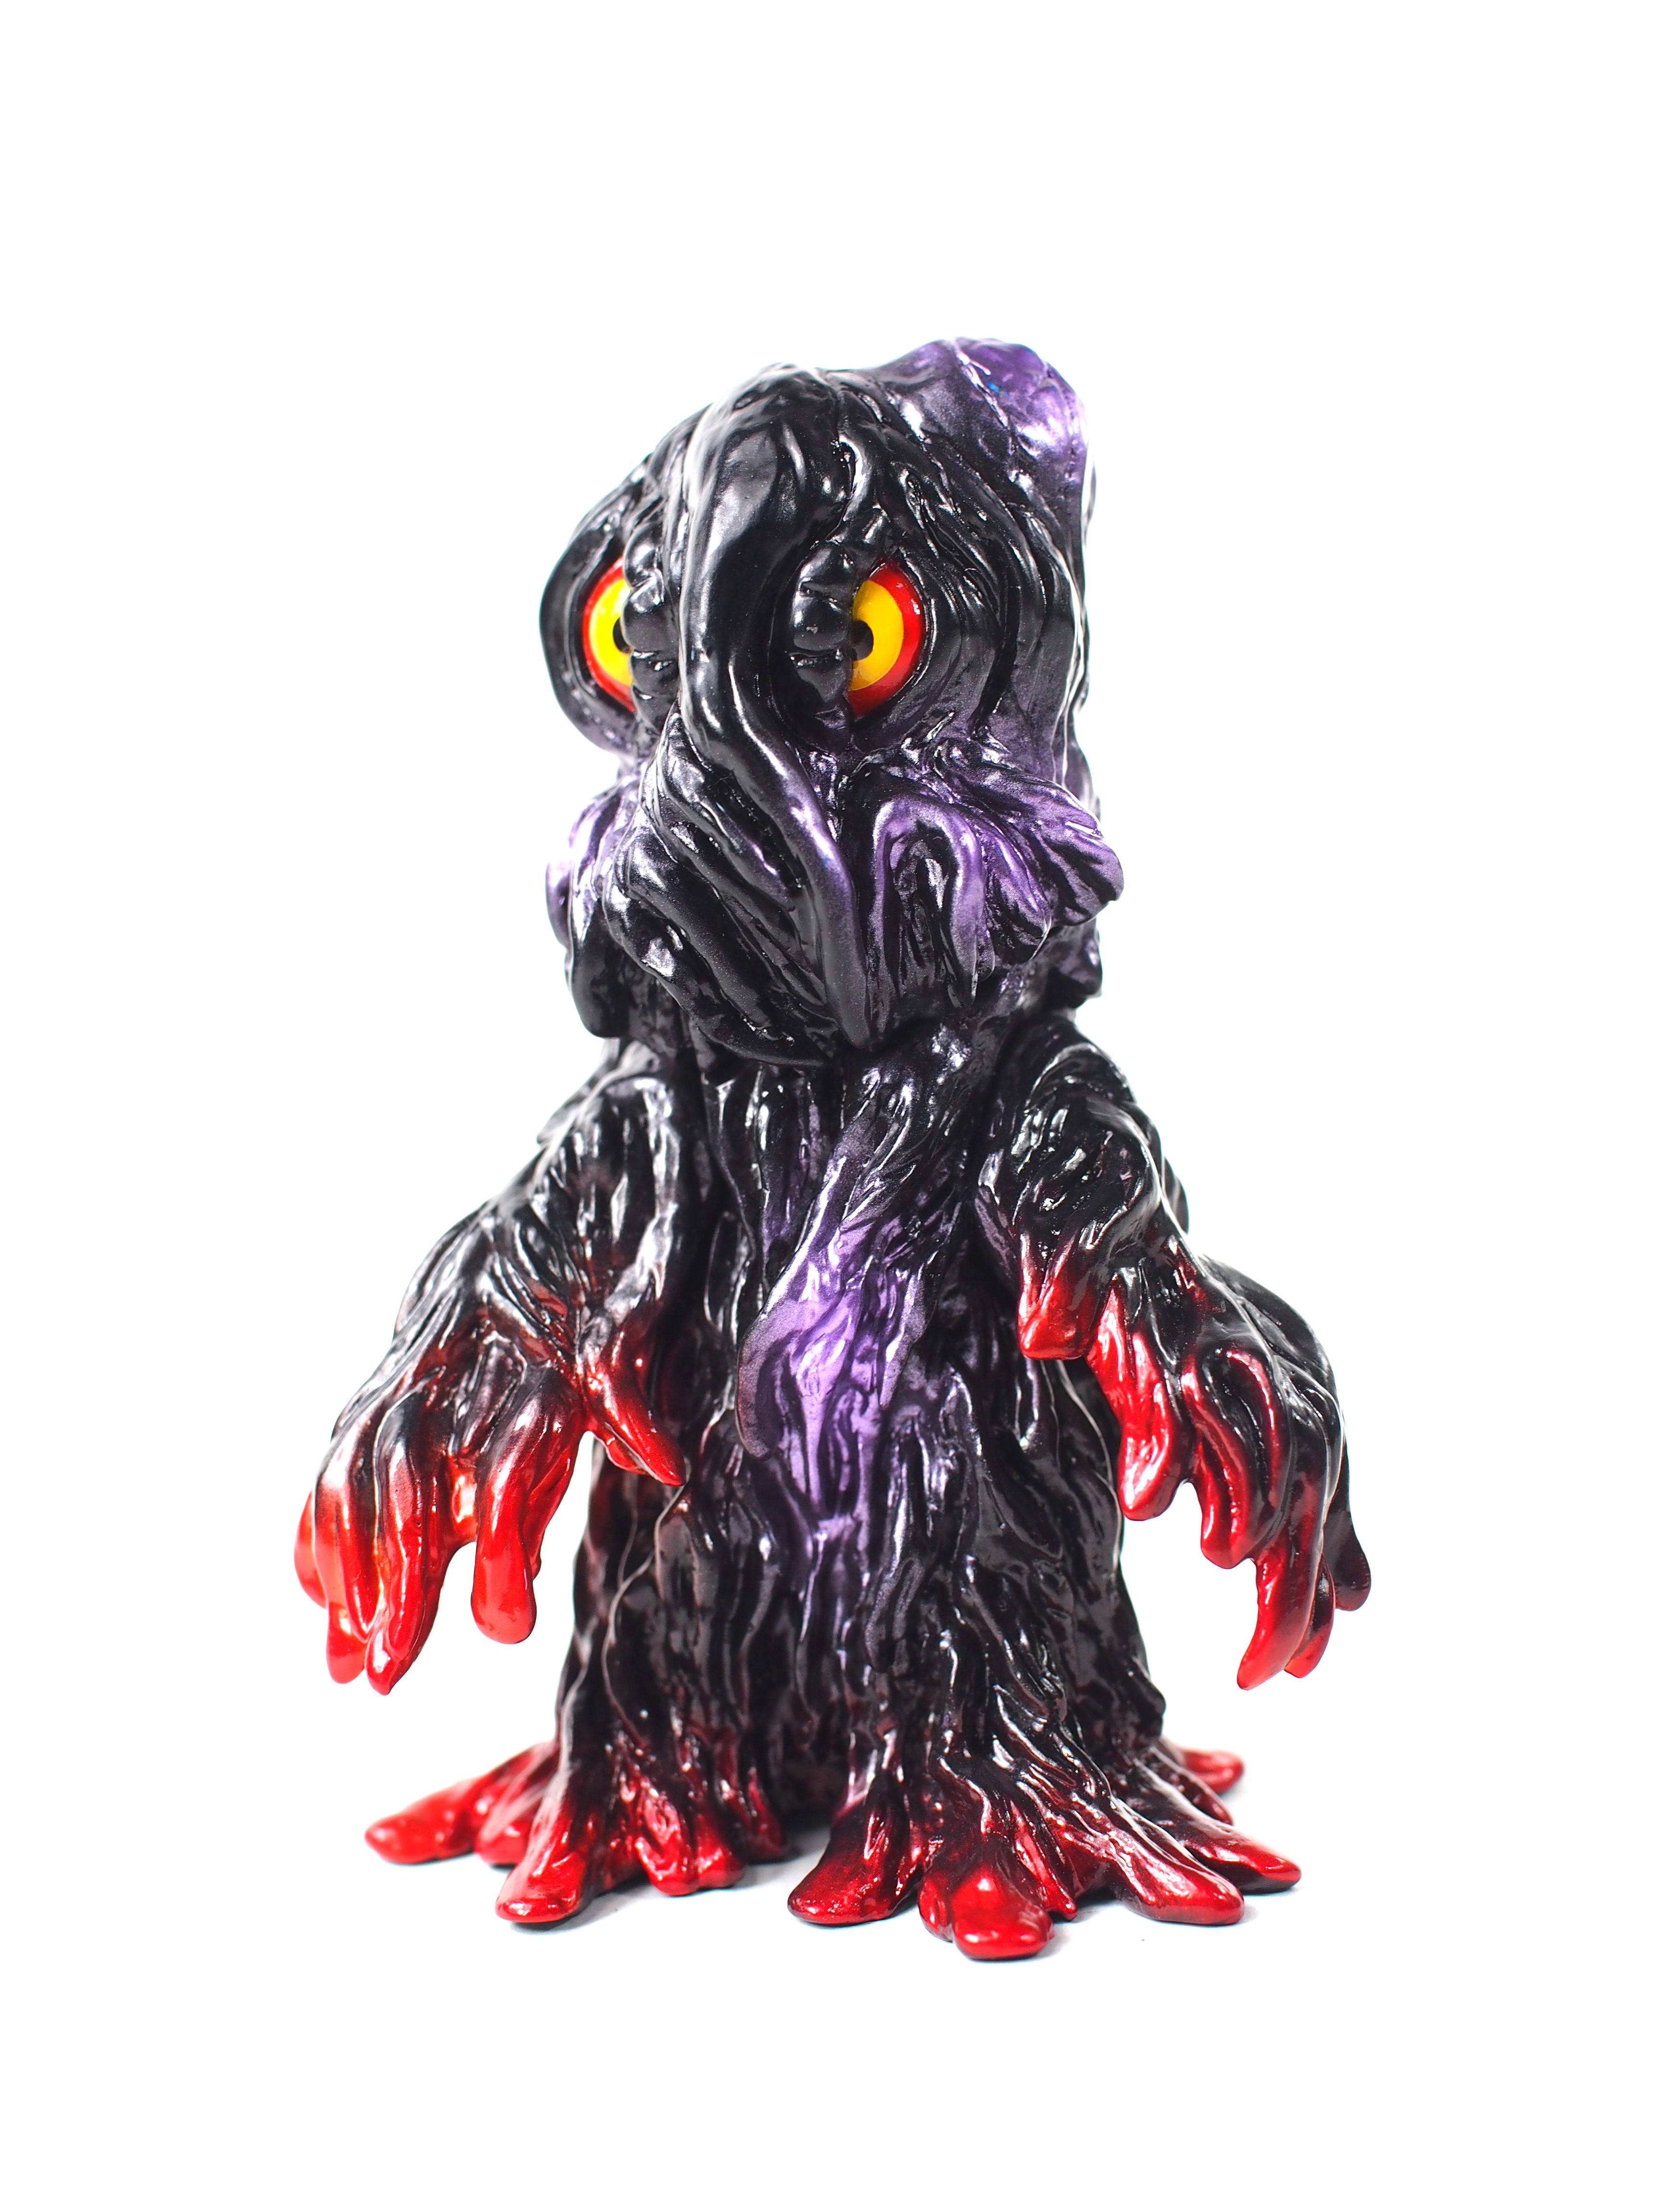 CCP Middle Size Series 81st Hedorah Nightmare Figure (Godzilla)